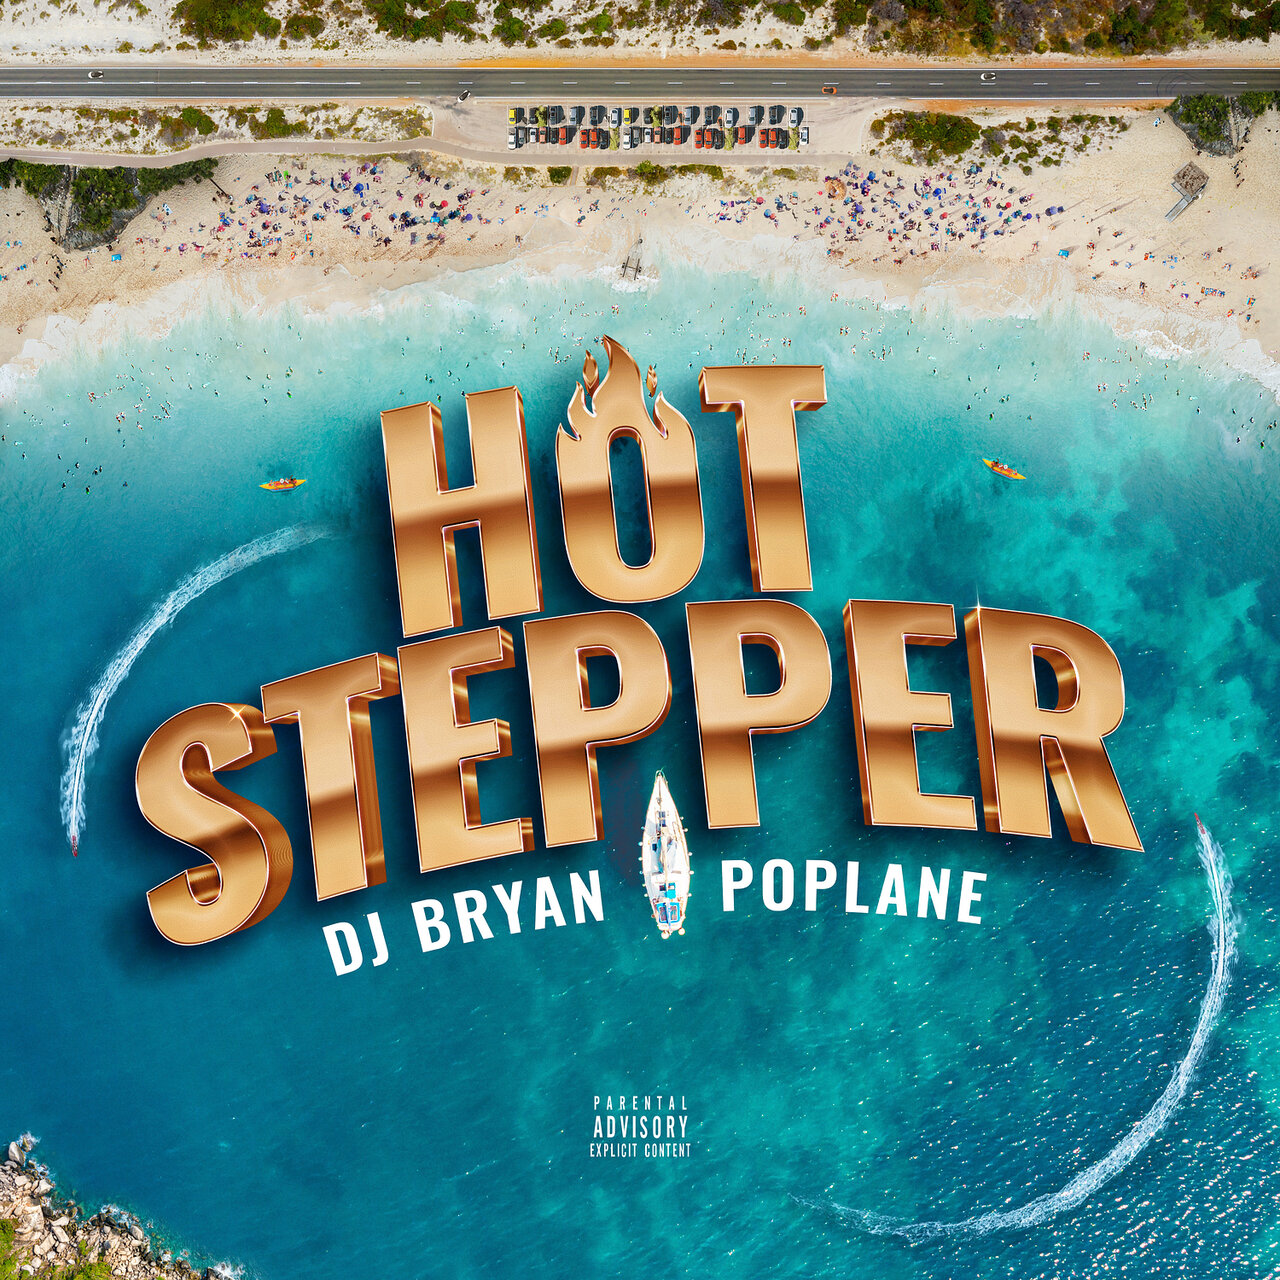 DJ Bryan and Poplane - Hot Stepper (Cover)